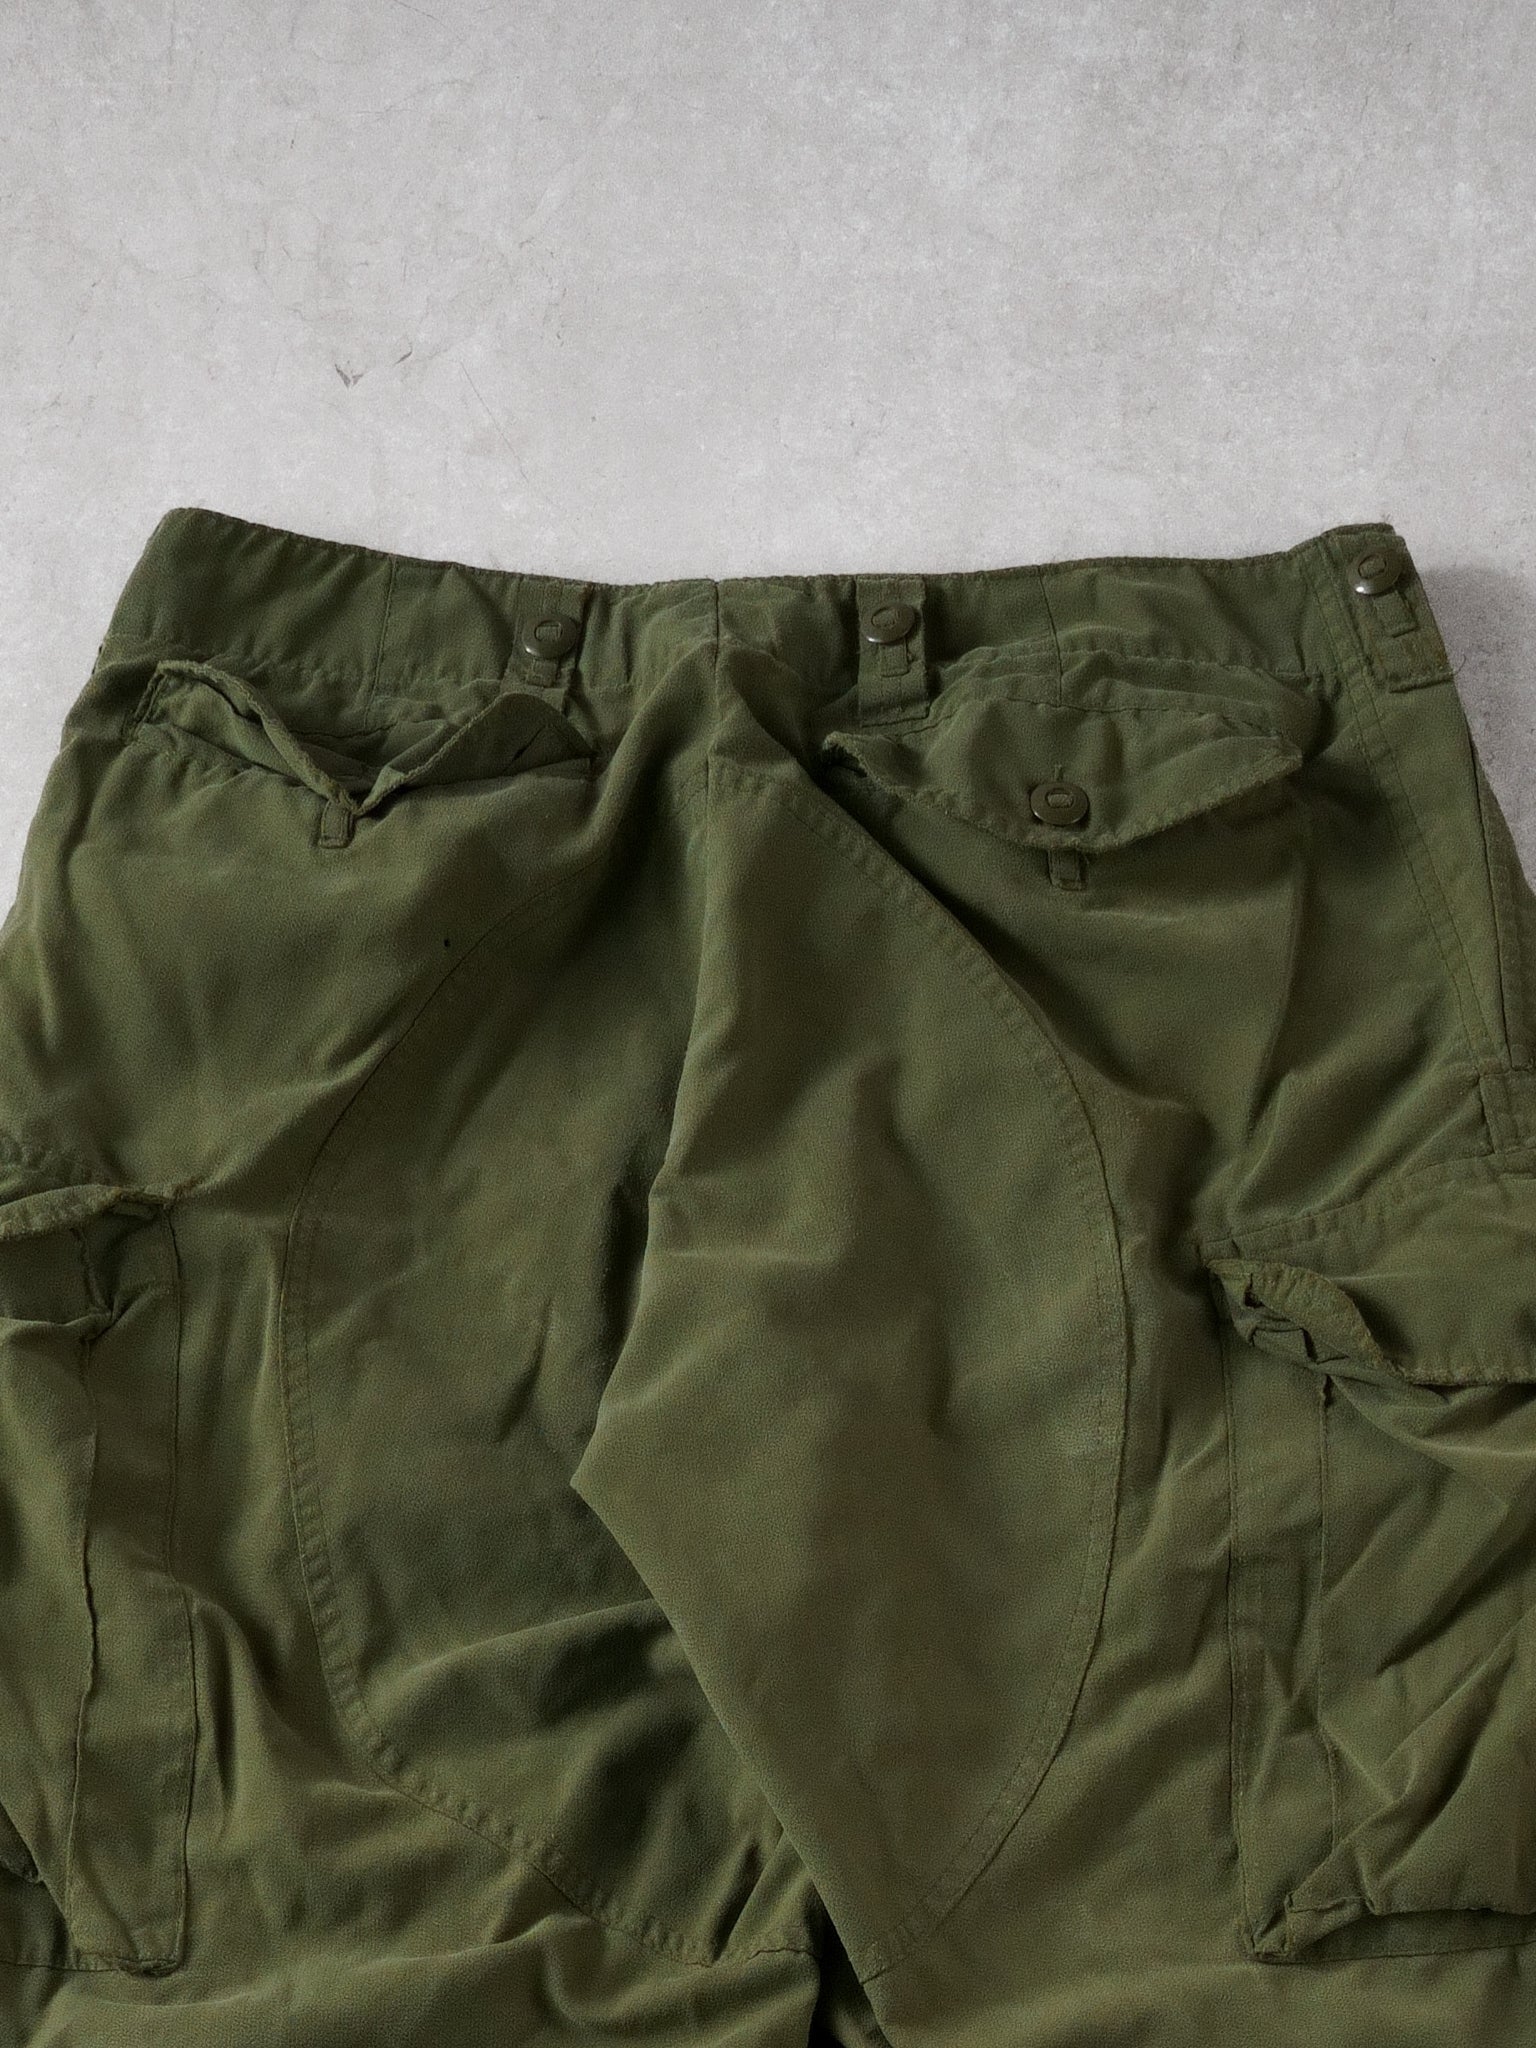 Vintage 90s Army Green Parachute Pants (34x28)